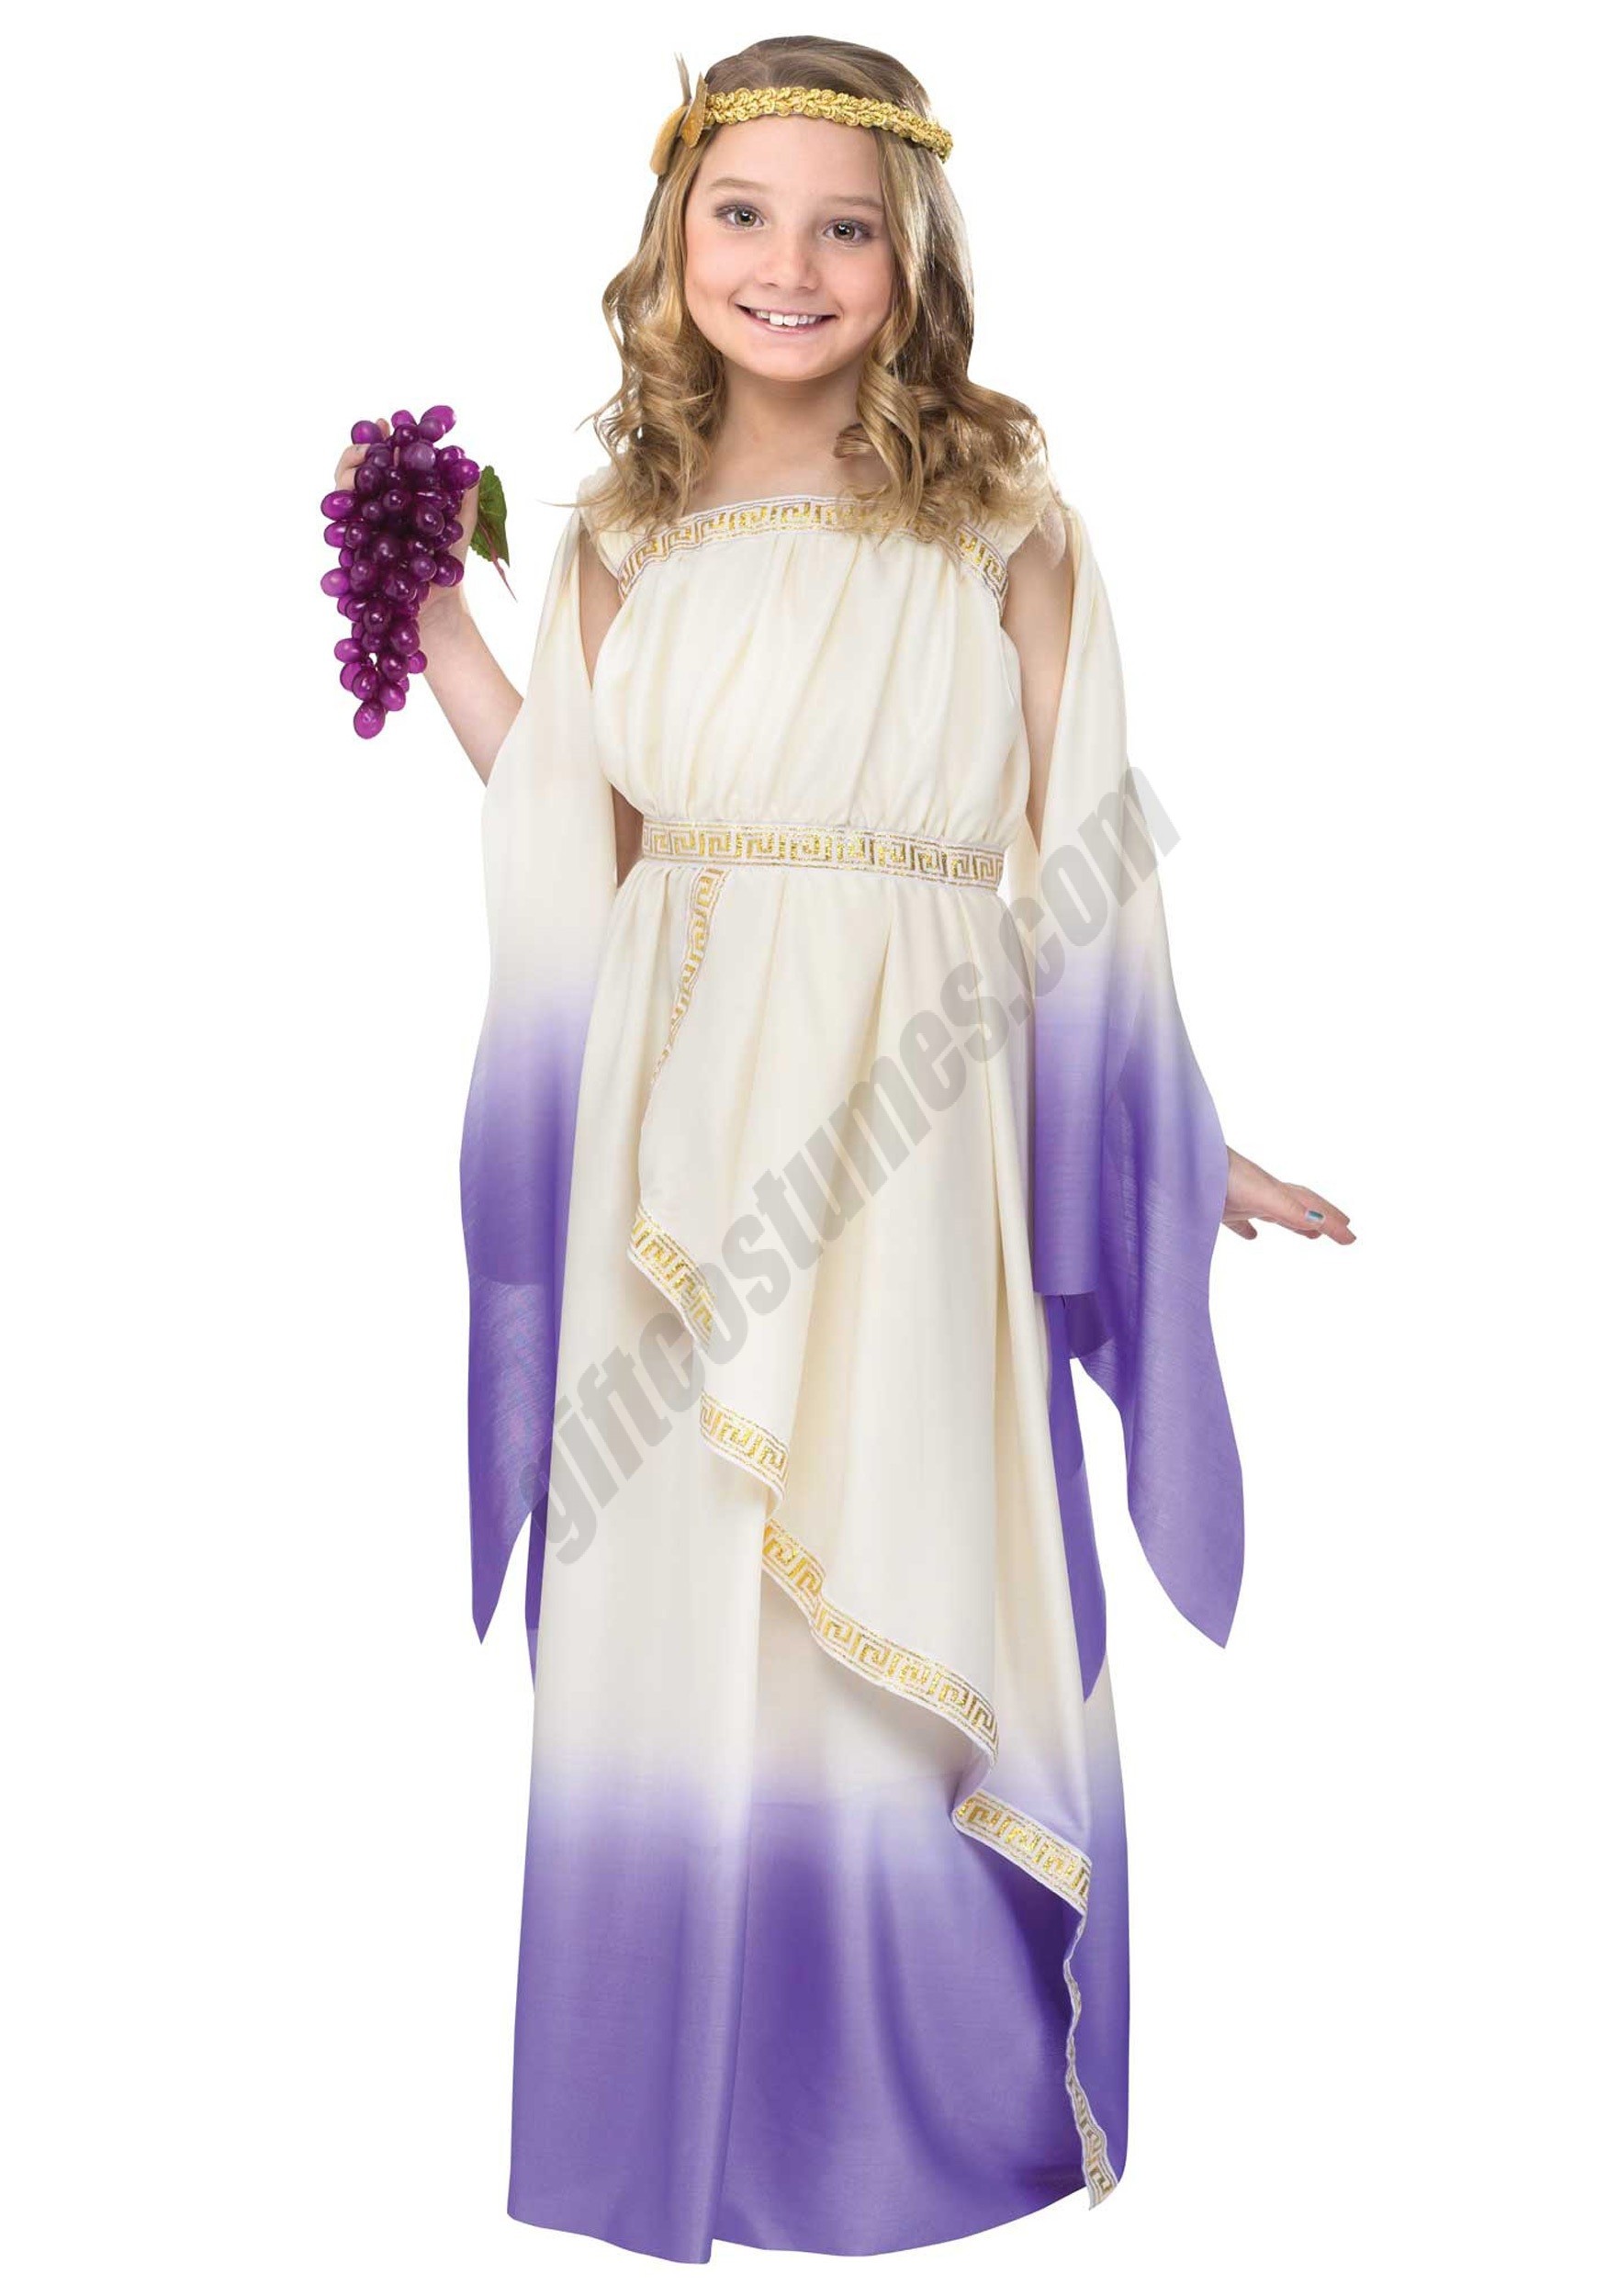 Girls Purple Goddess Costume Promotions - Girls Purple Goddess Costume Promotions